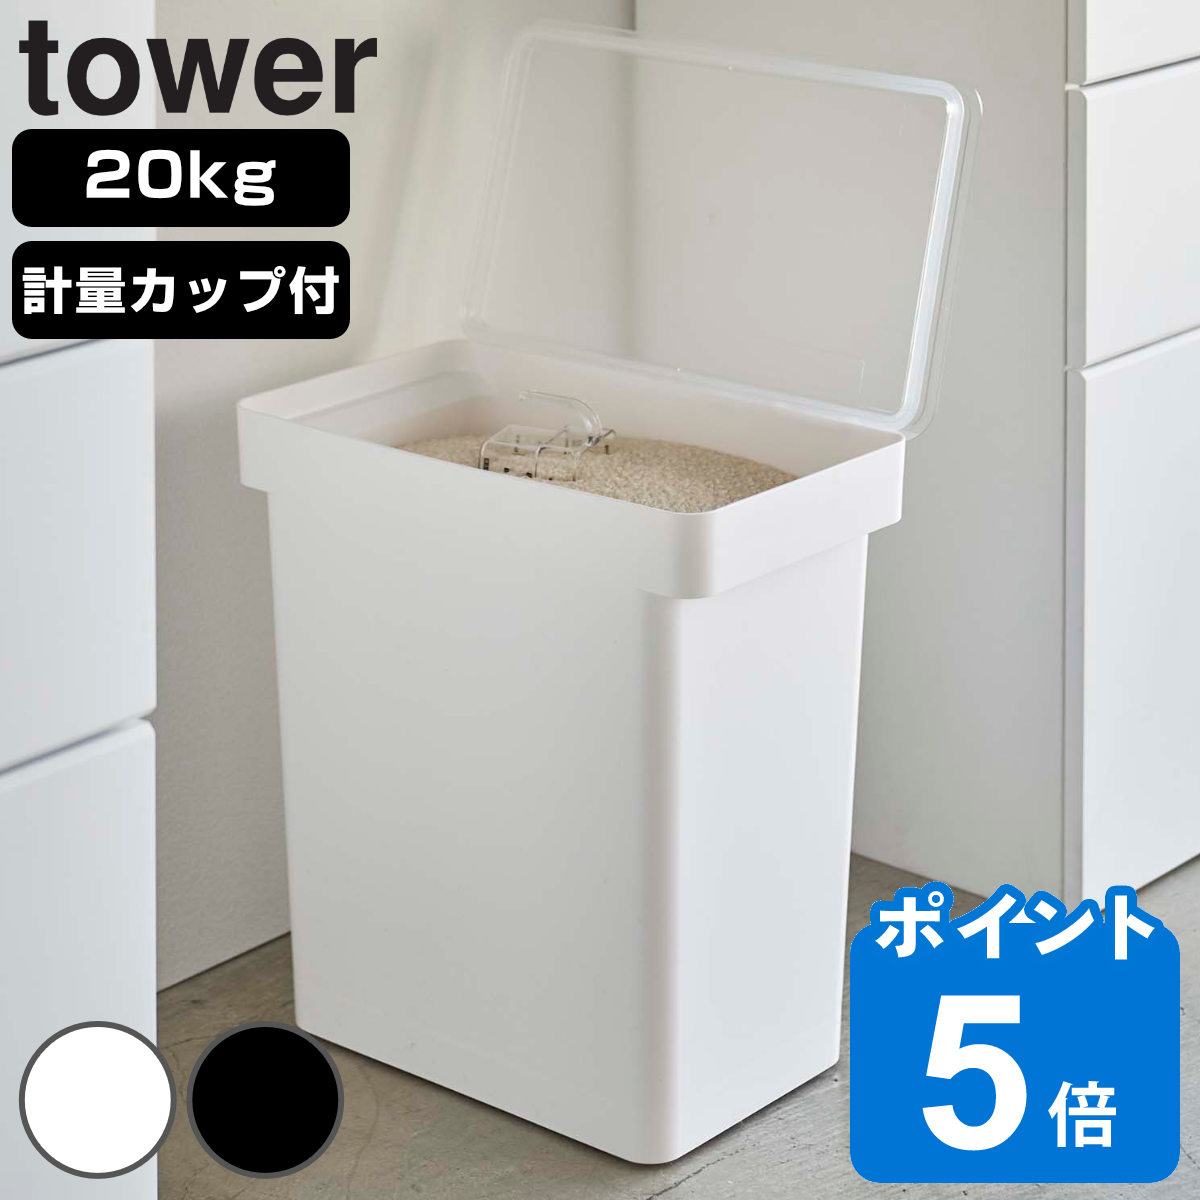 tower 密閉米びつ タワー 20kg 計量カップ付